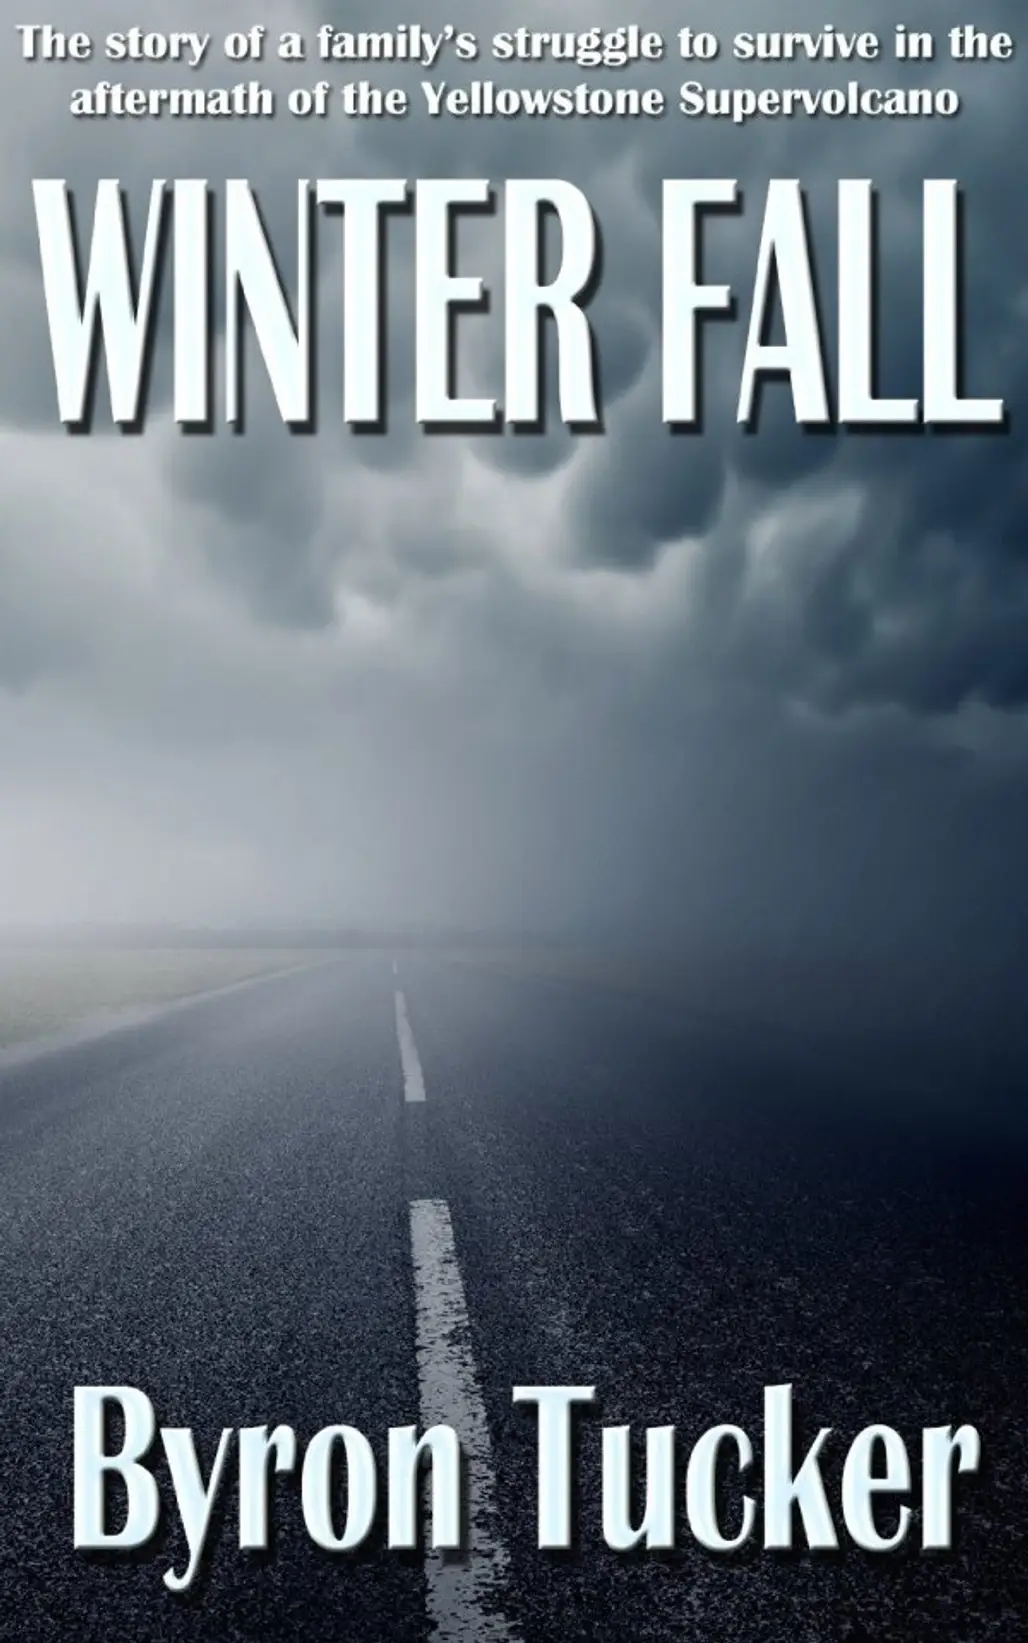 Winter Fall by Byron Tucker